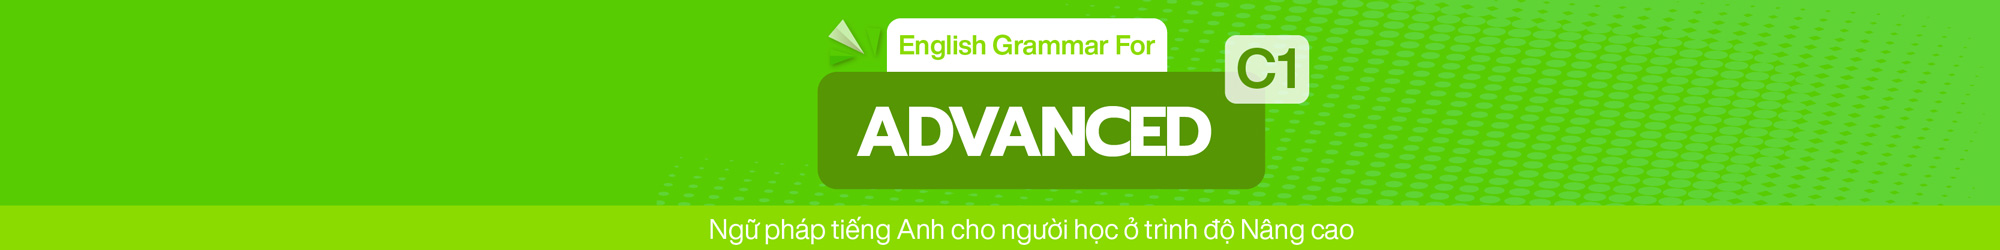 ENGLISH GRAMMAR FOR ADVANCED (C1) banner